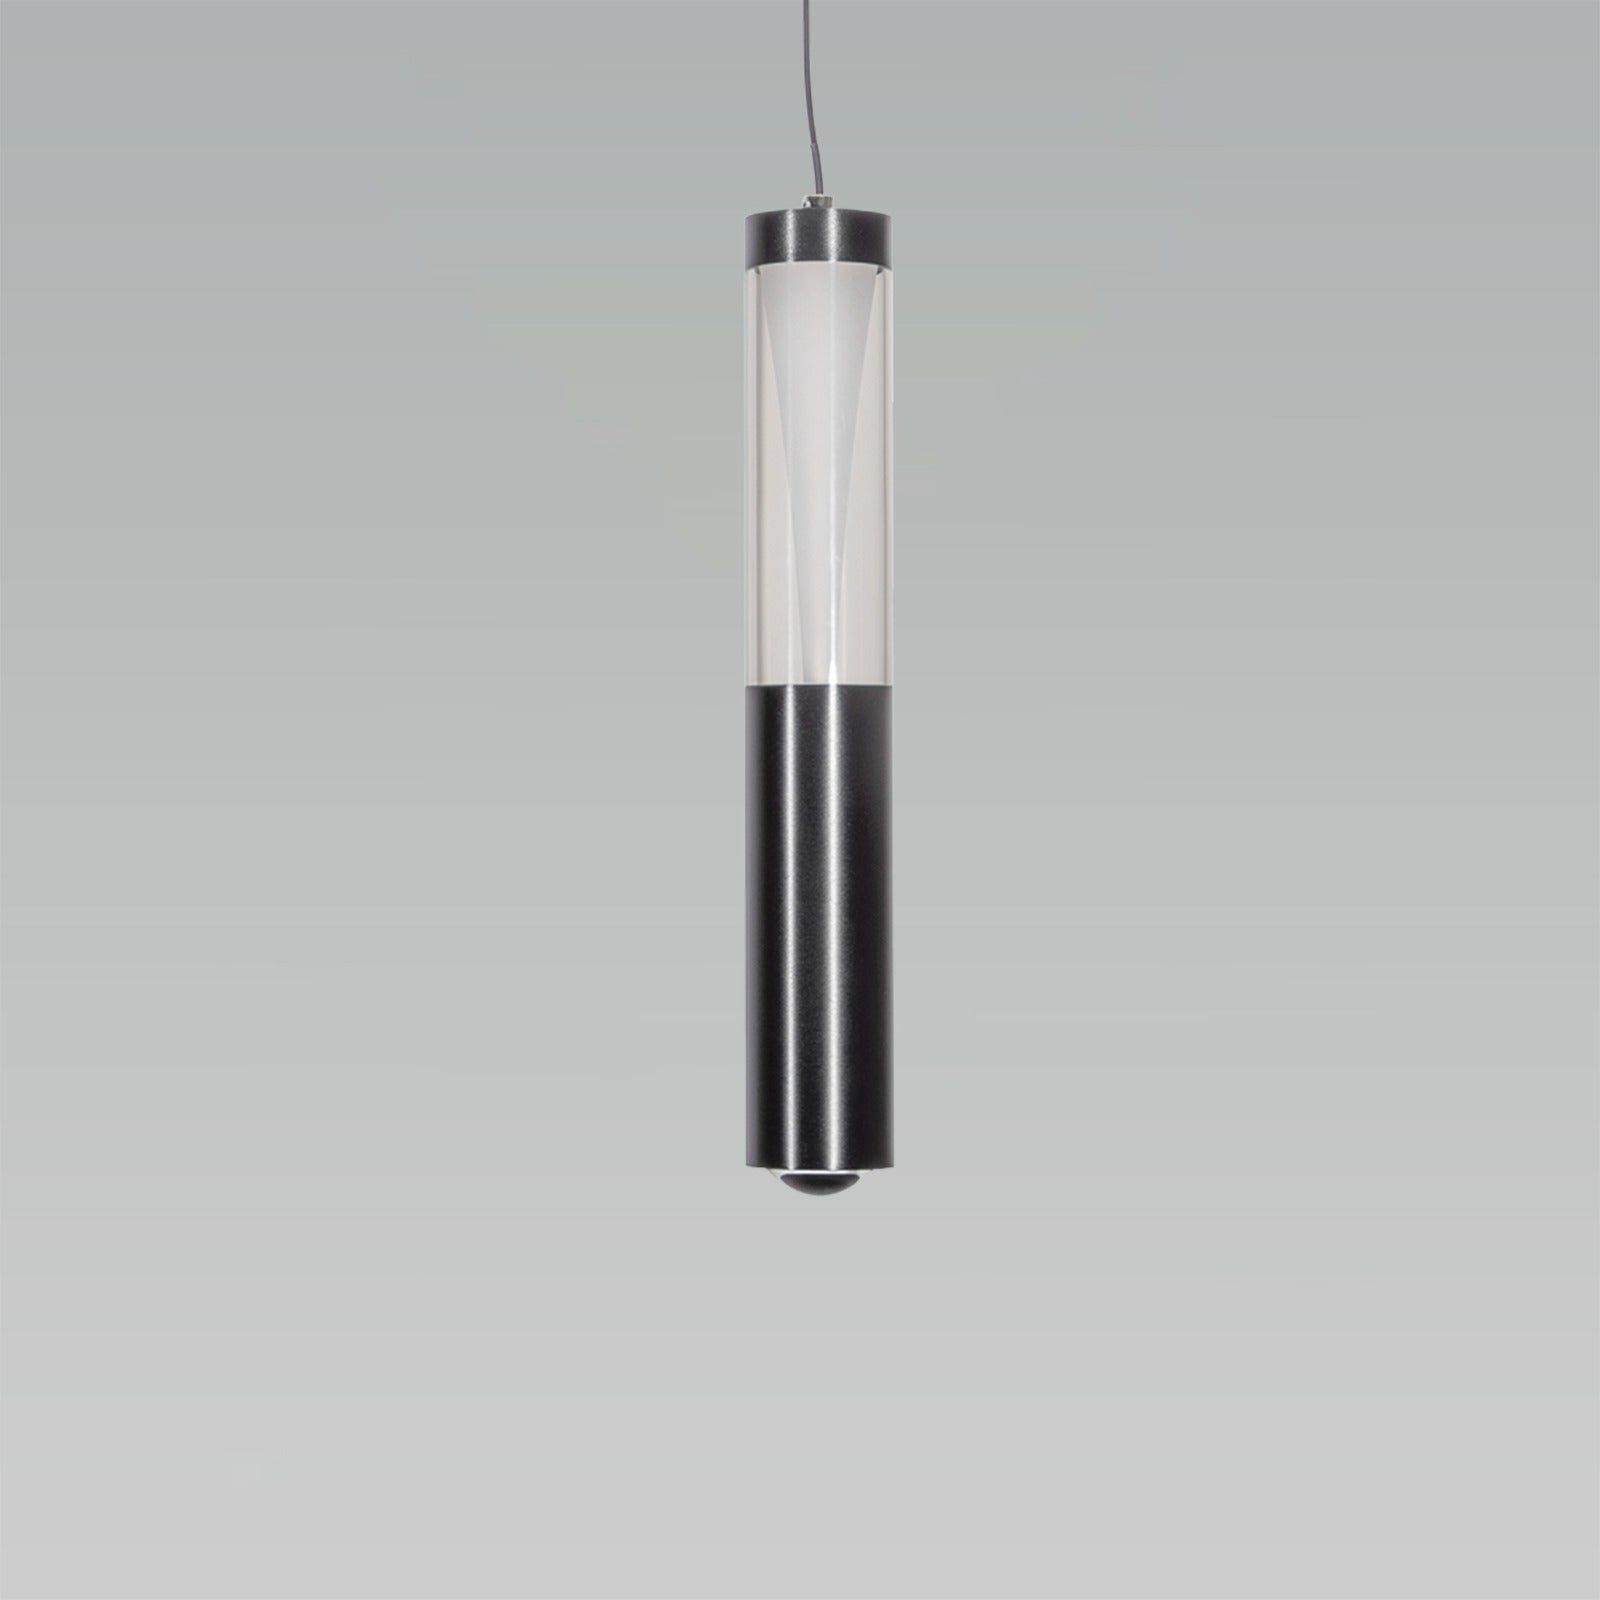 Shop Italian Touch Black LED Pendant Light online